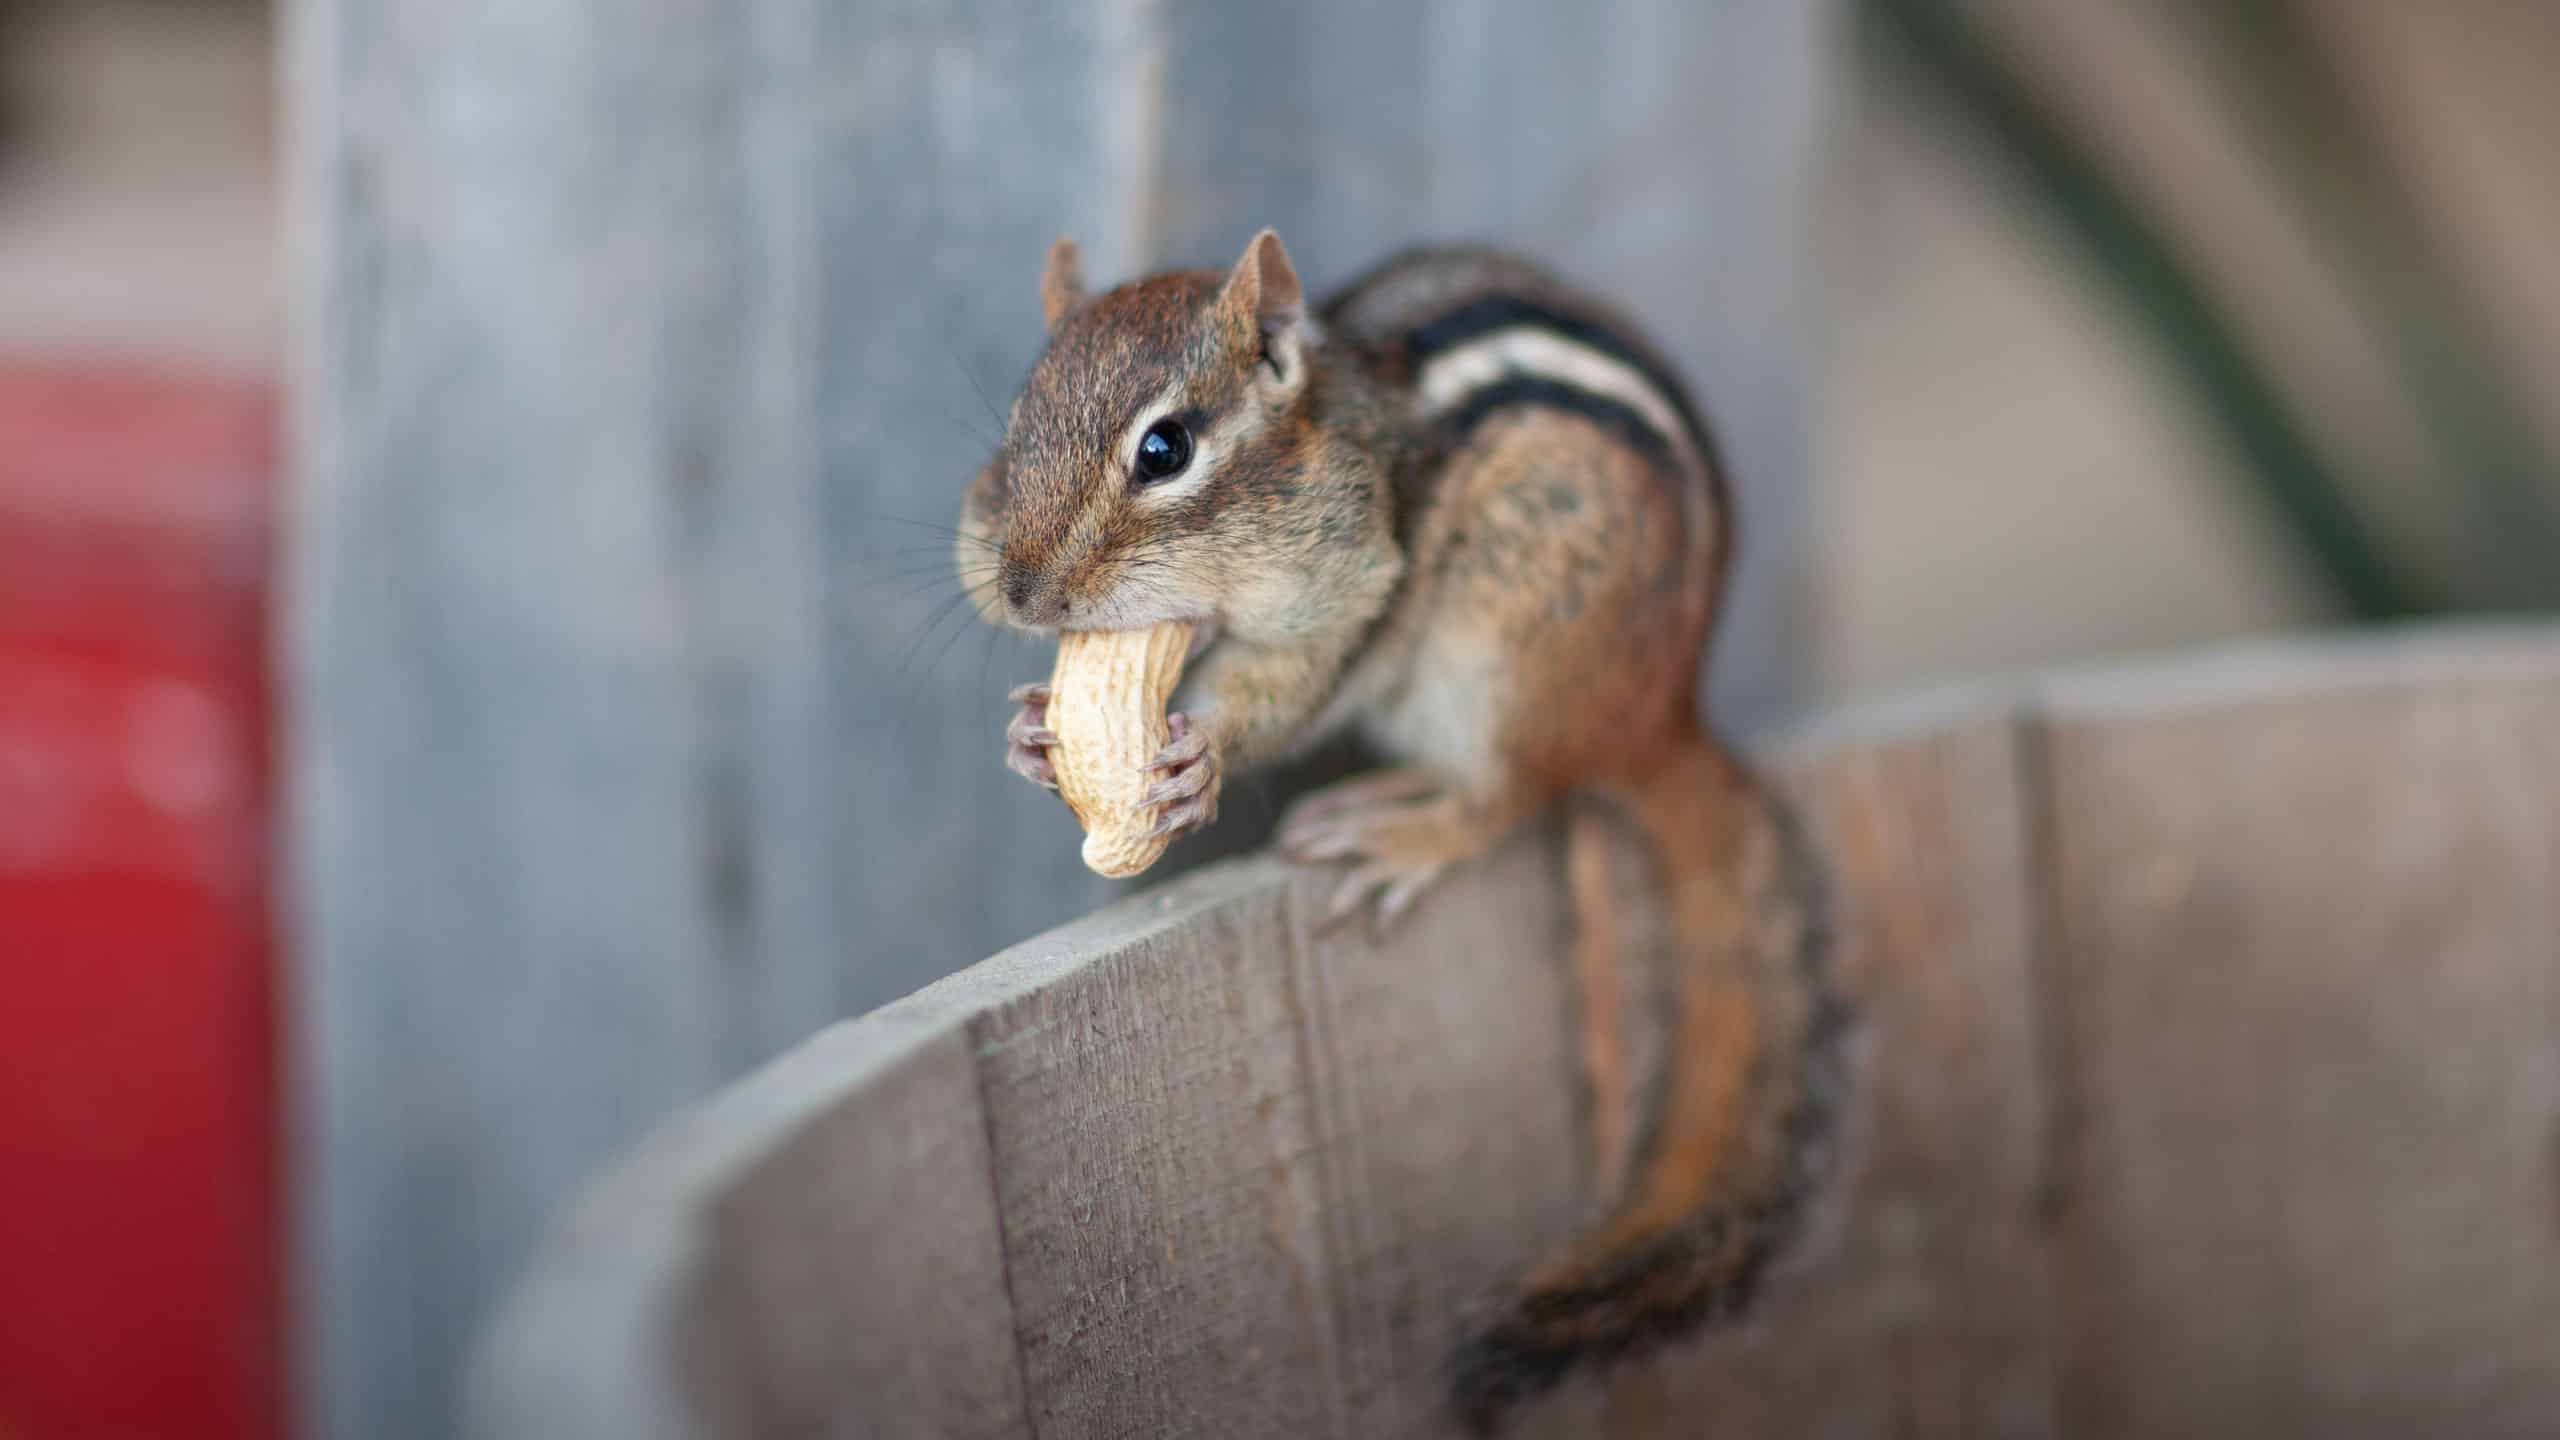 Ground squirrel with peanut